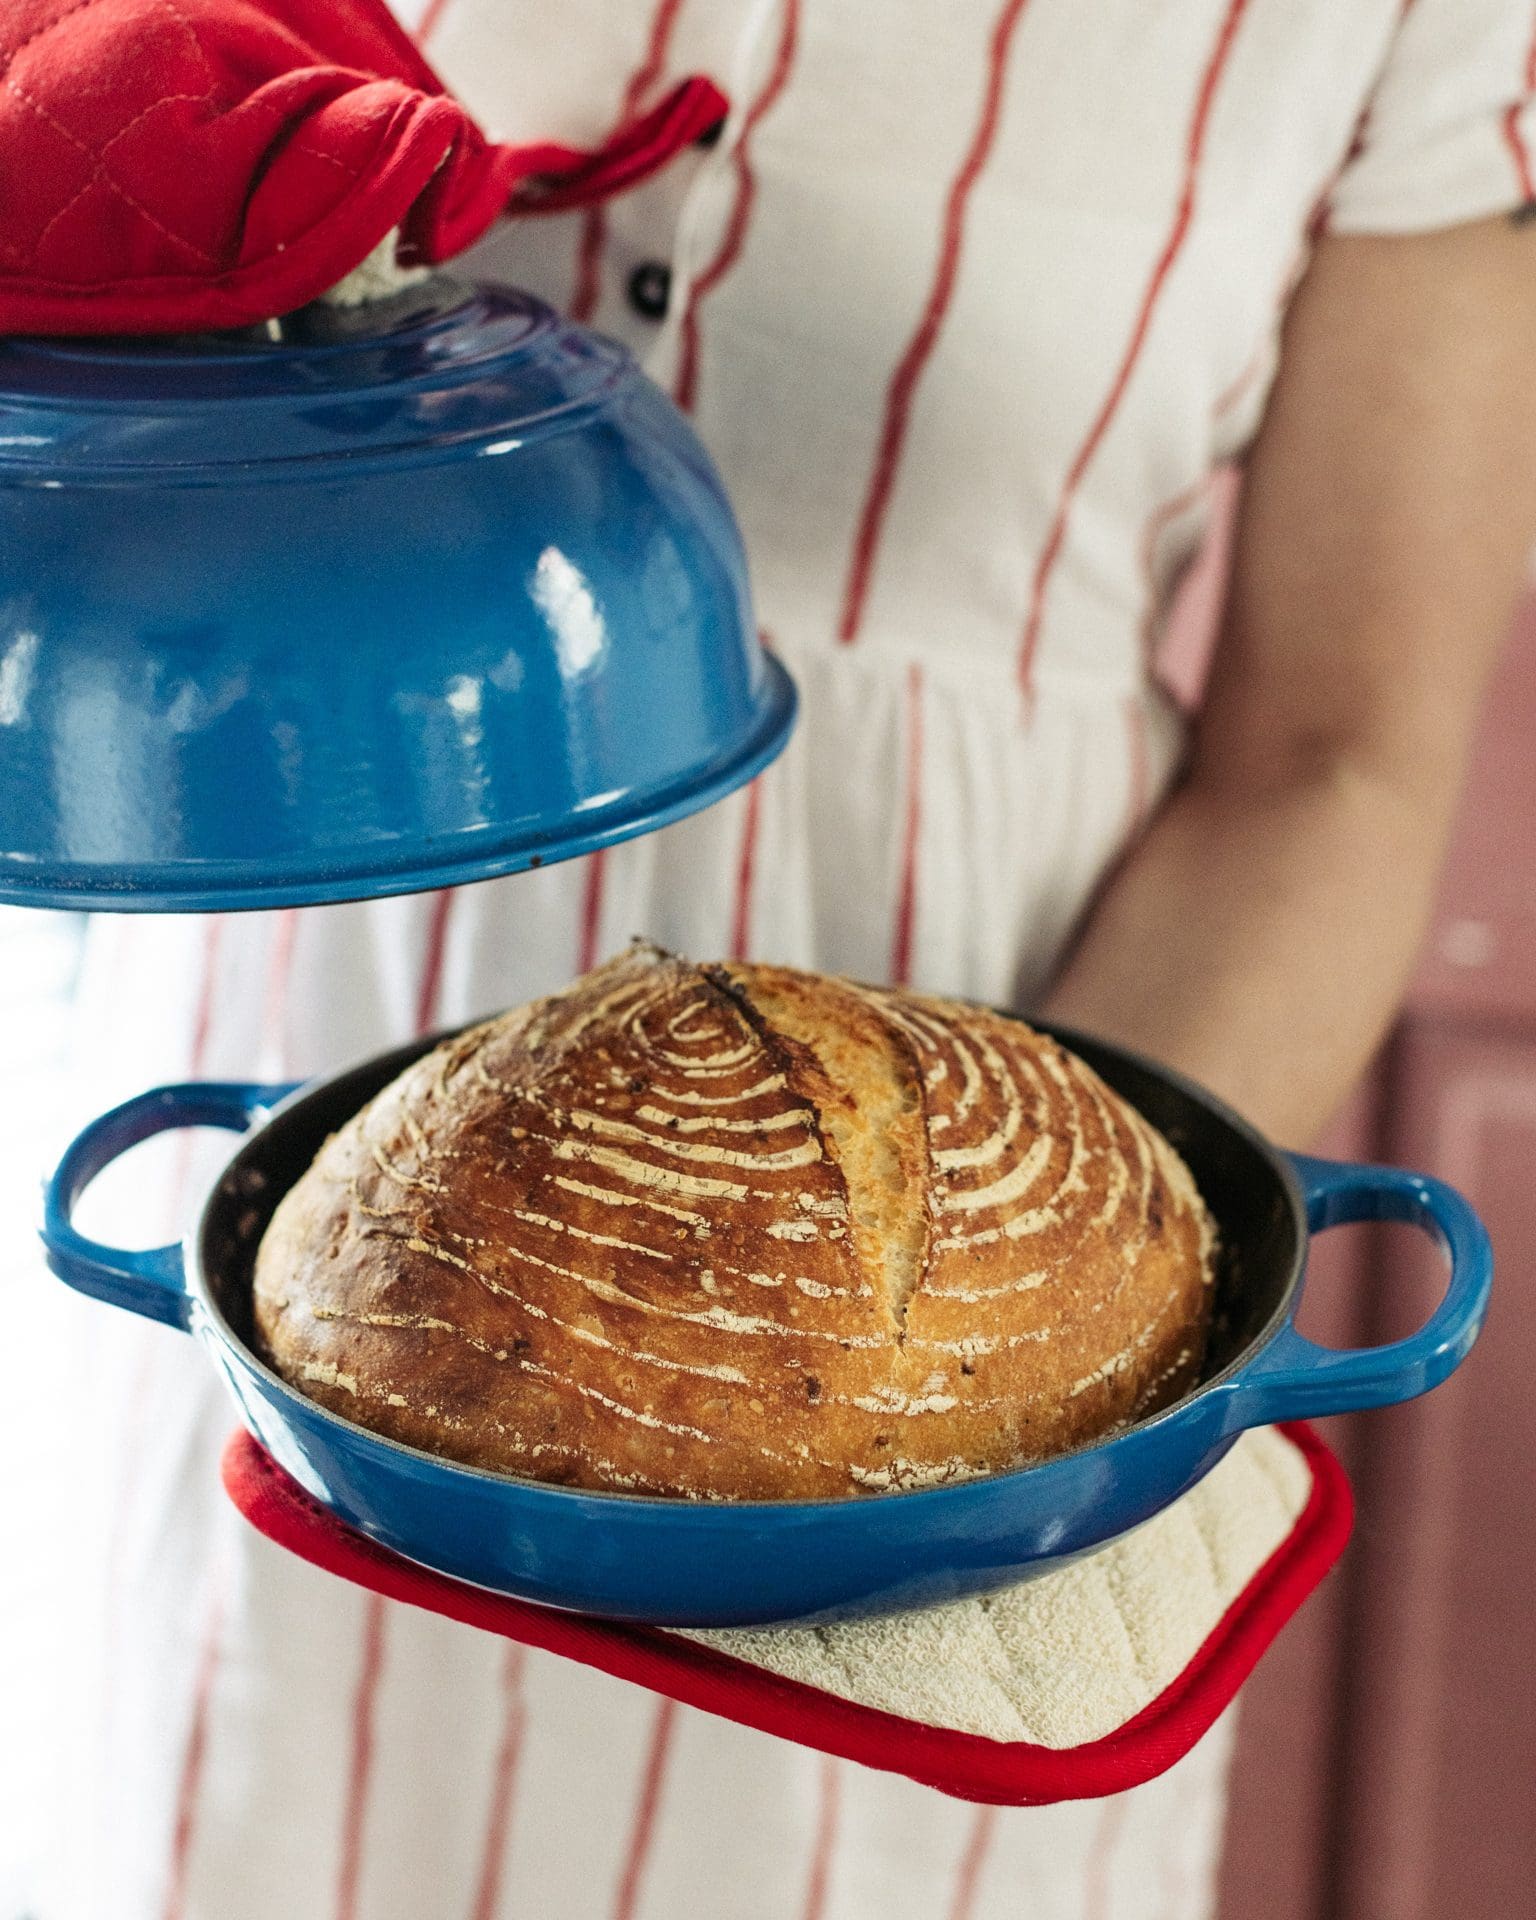 https://joythebaker.com/2022/03/easy-no-knead-everything-rye-bread/attachment/joy-the-baker-le-creuset-bread-oven-web-size-61/